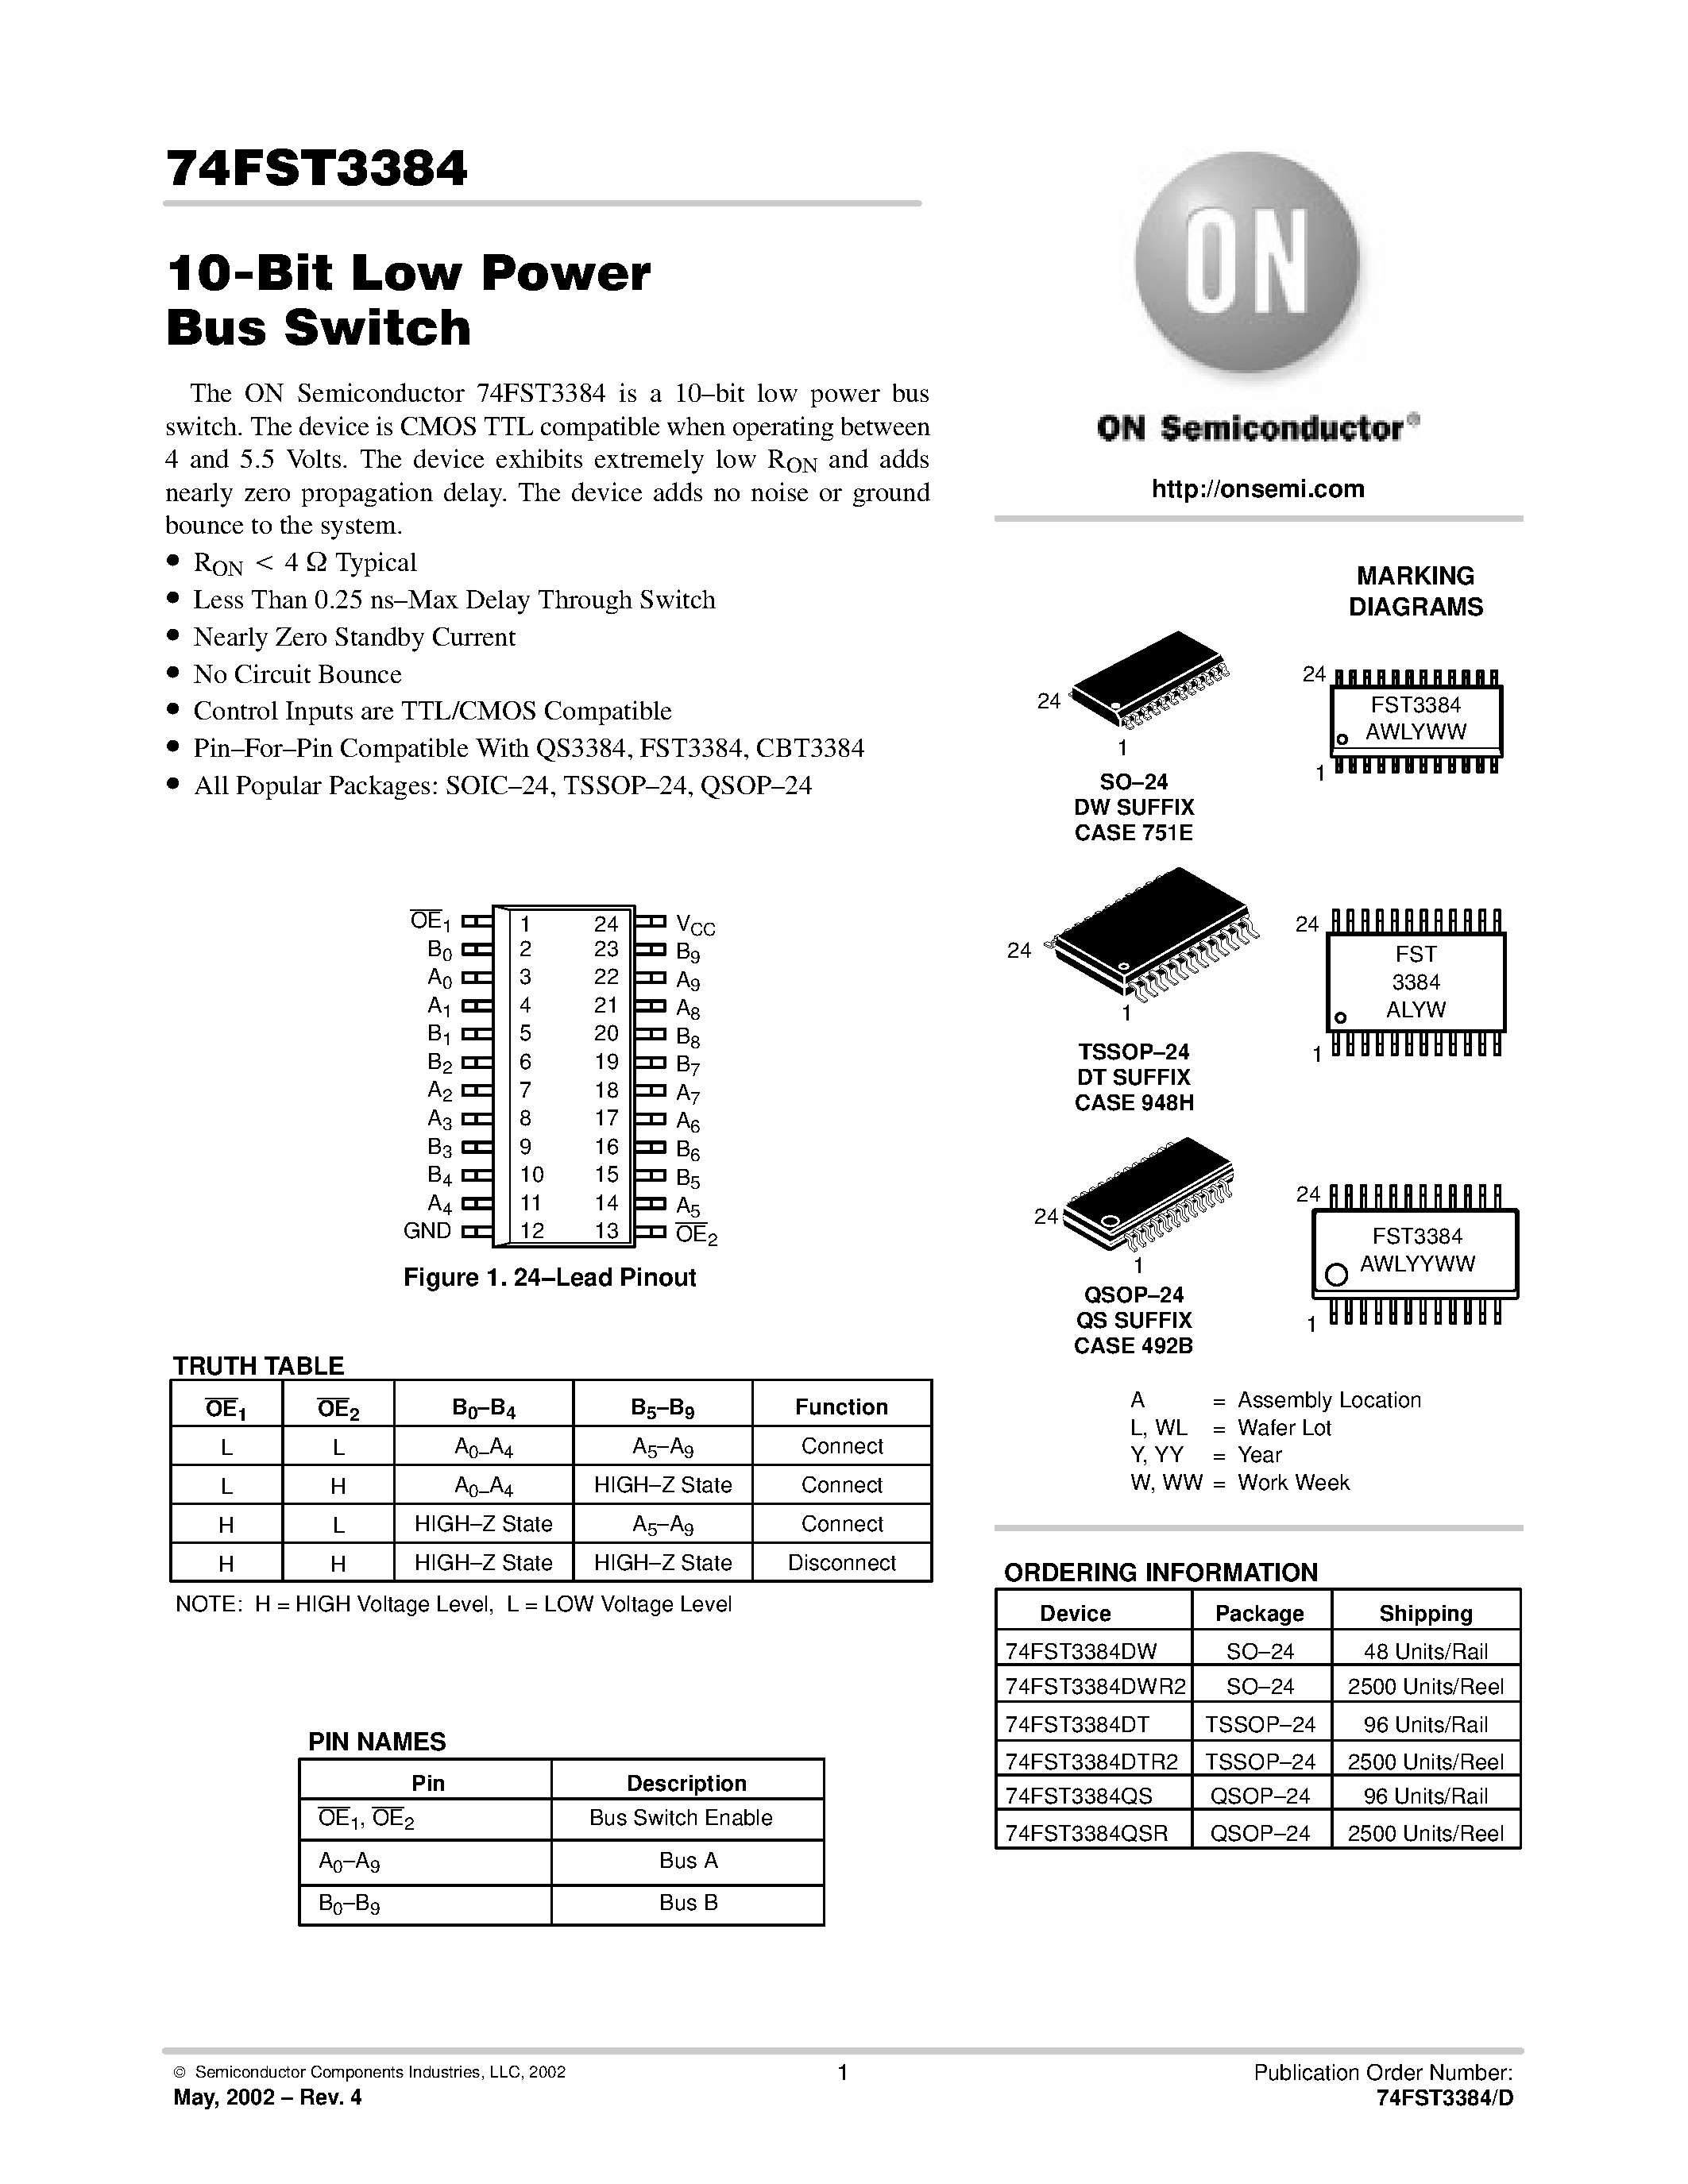 Datasheet 74FST3384 - 10-Bit Low Power Bus Switch page 1